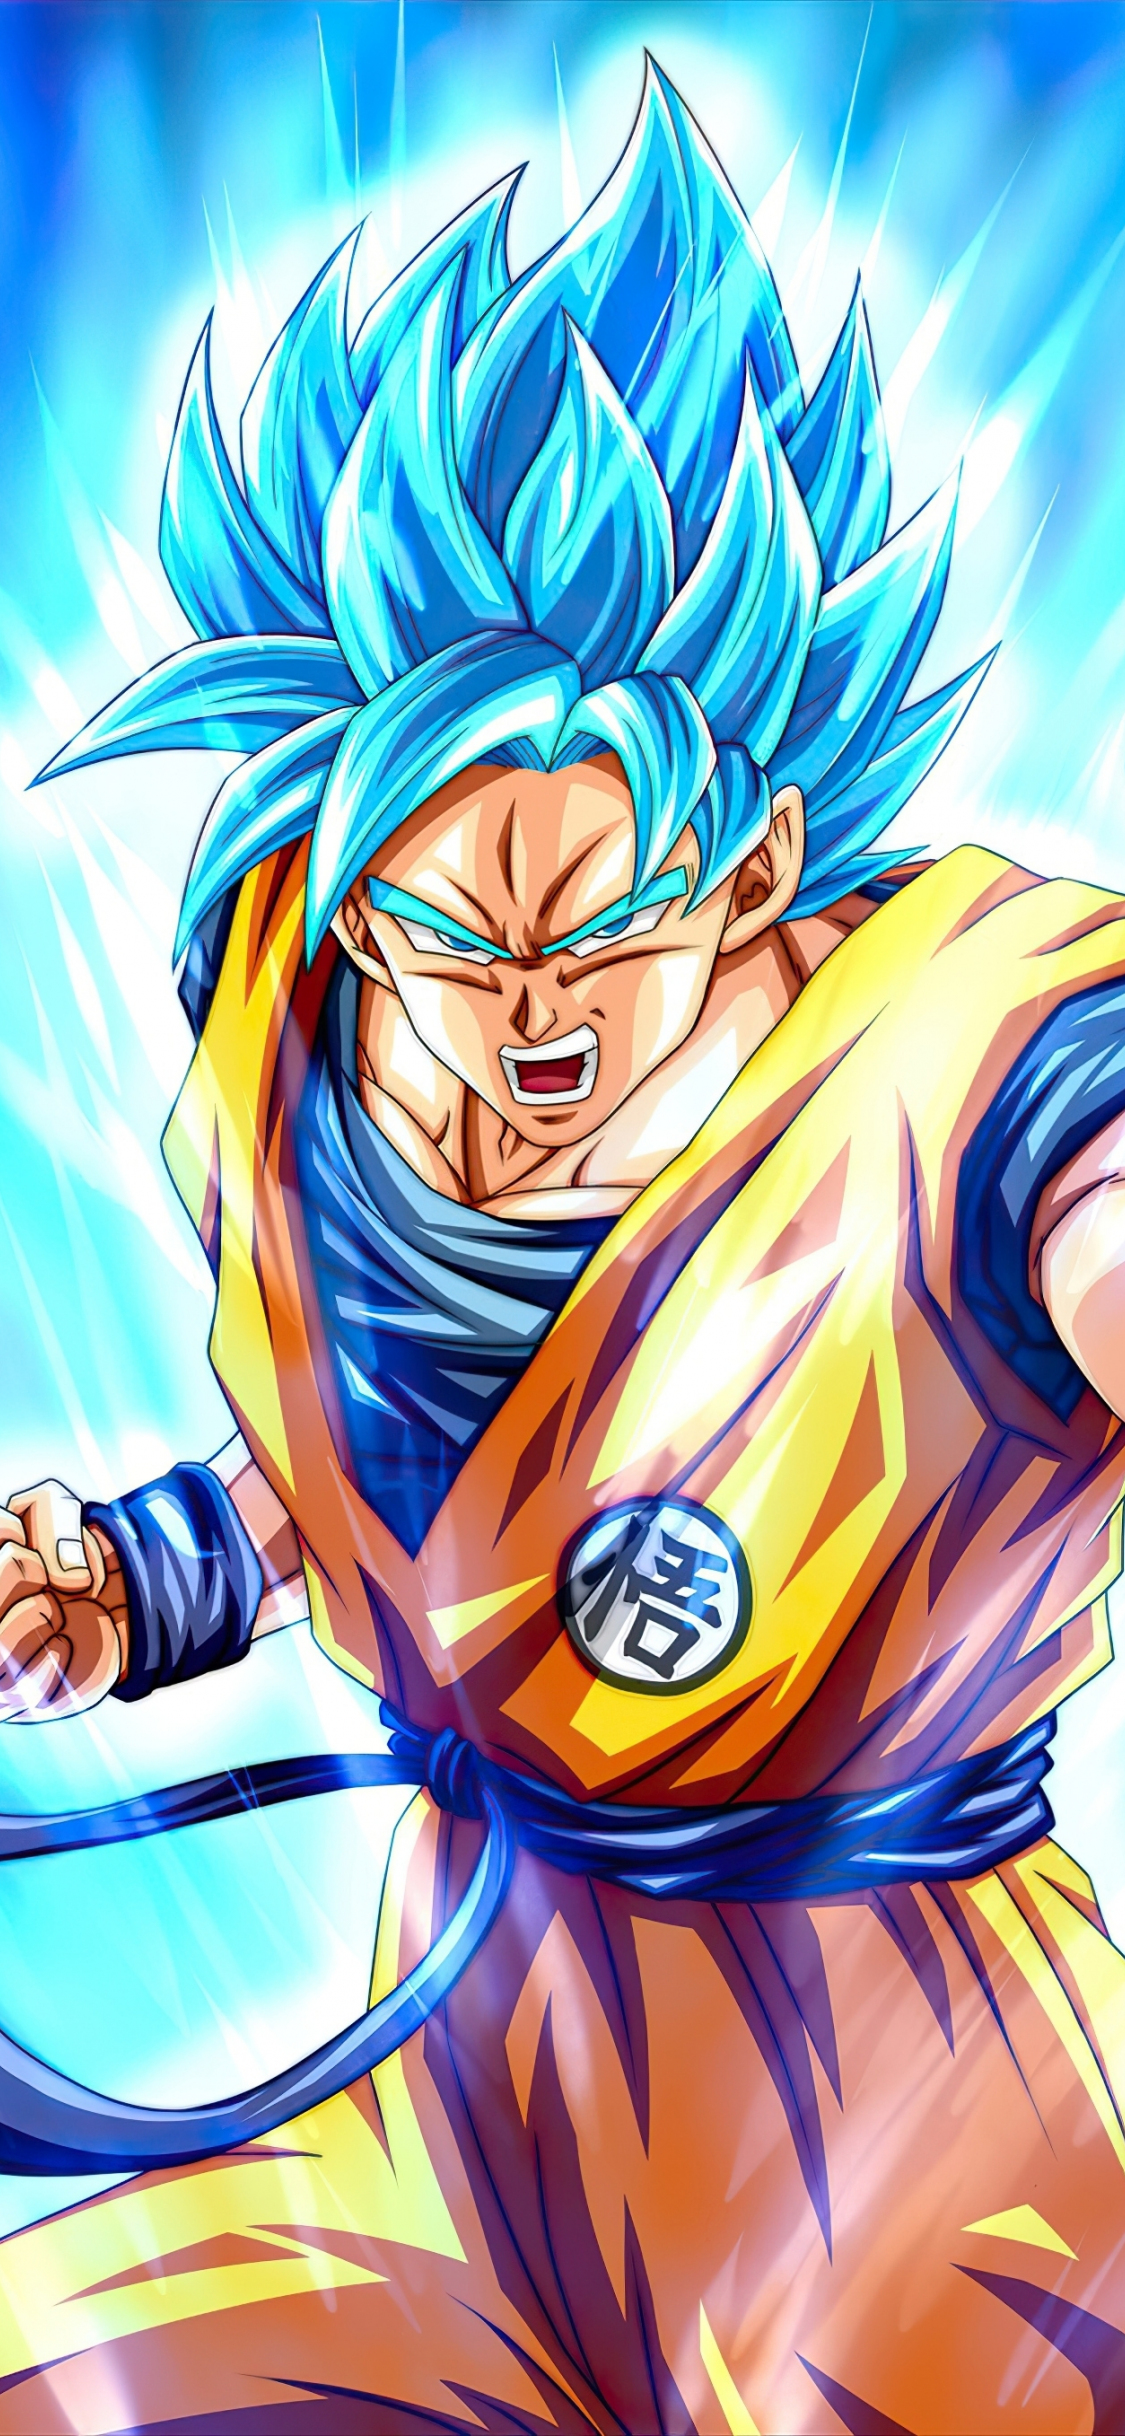 Download Dragon Ball Son Goku Blue Power 1125x2436 Wallpaper Iphone X 1125x2436 Hd Image Background